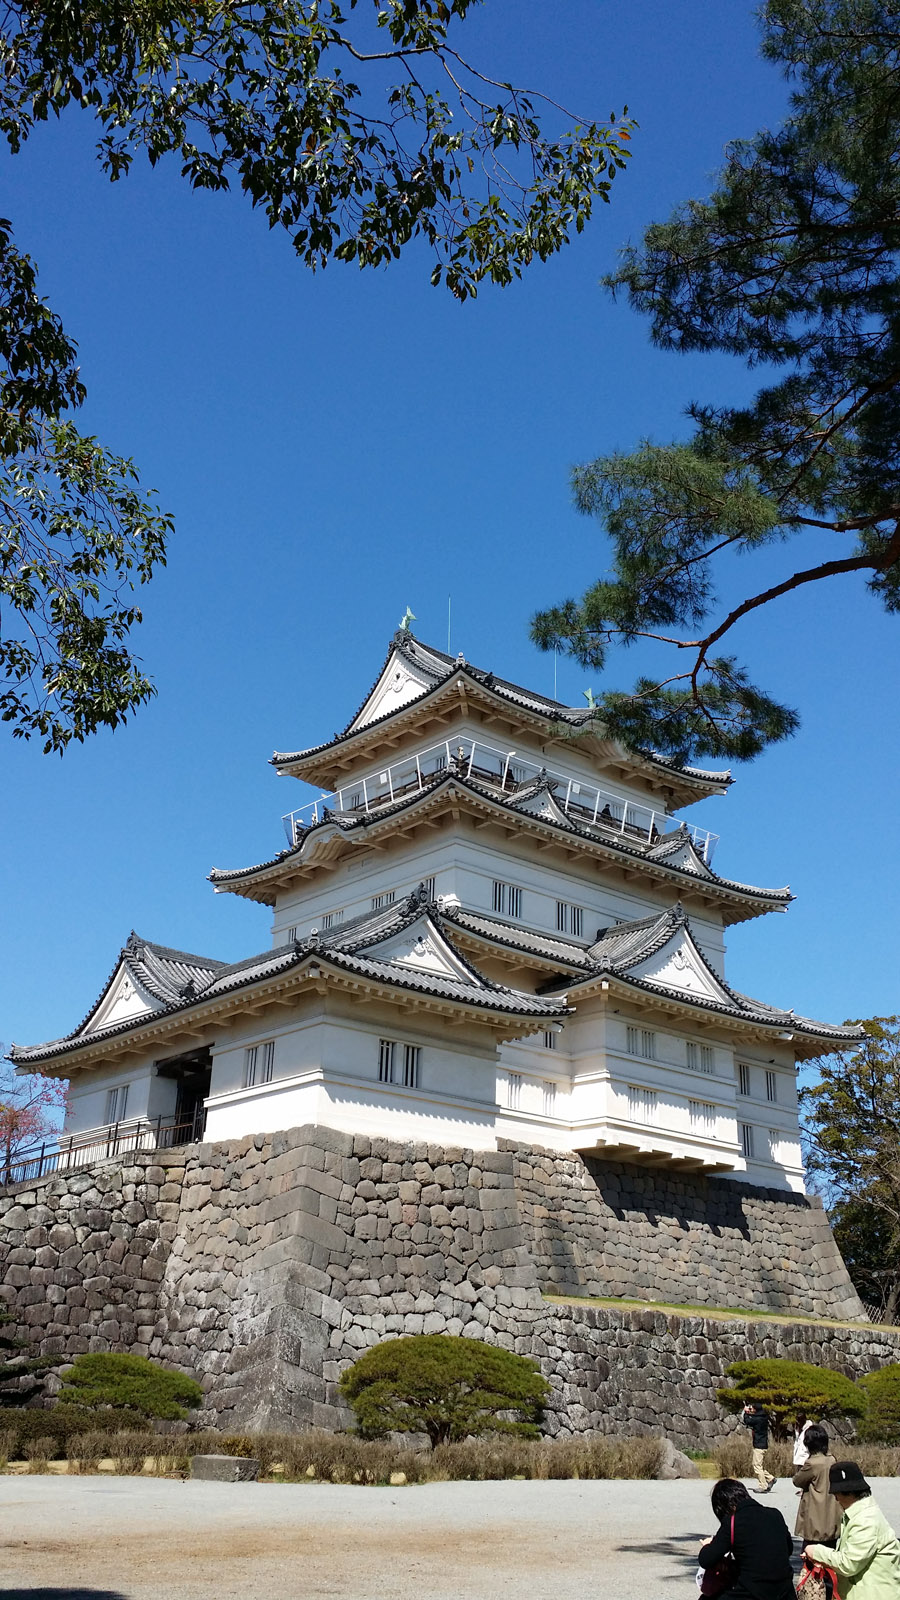 White beauty, Odawara Castle, Kanagawa Pref.